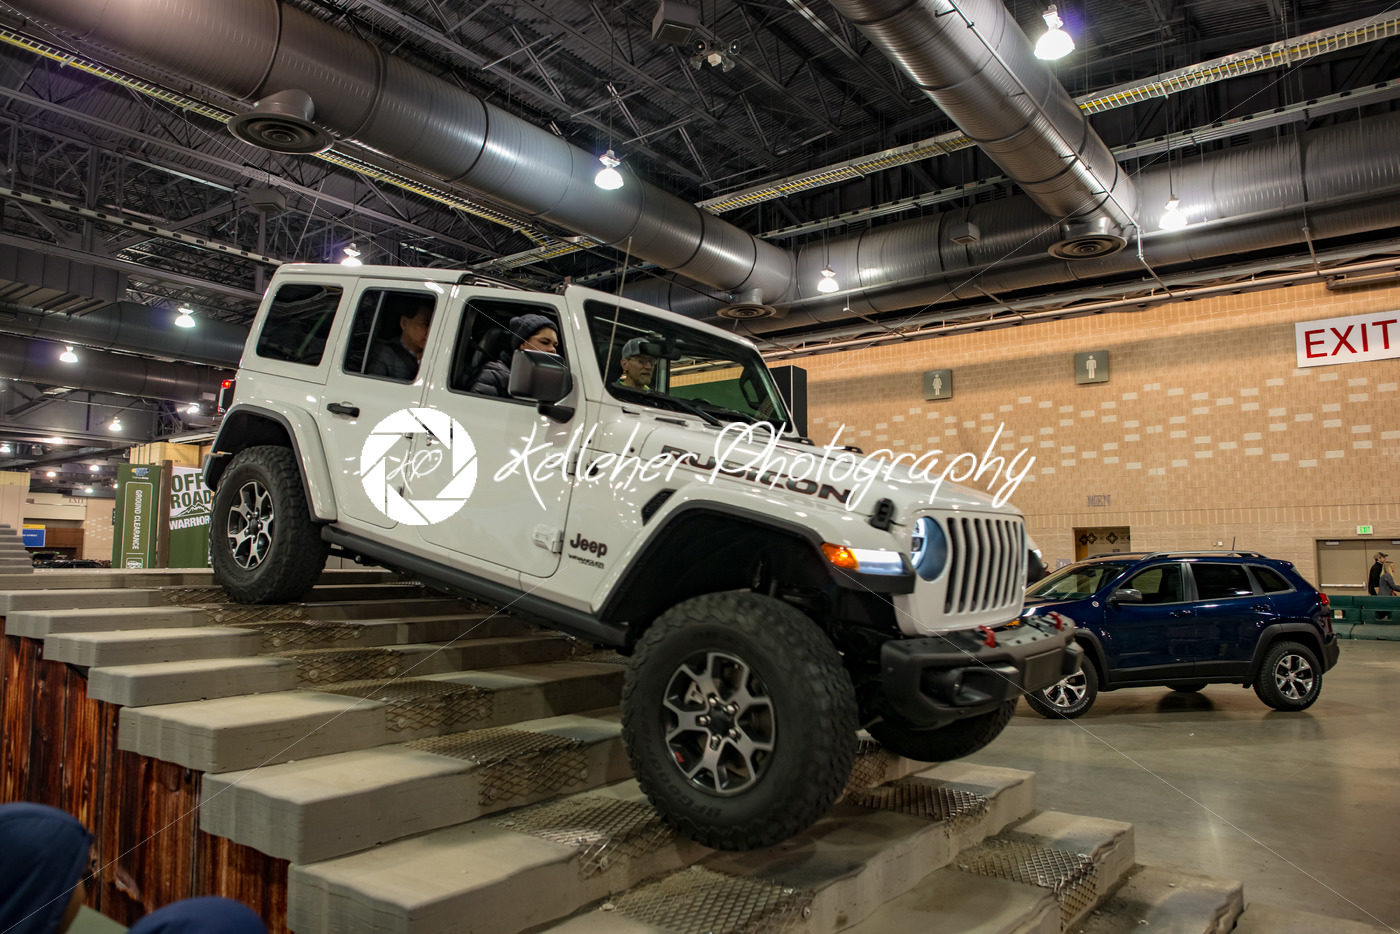 PHILADELPHIA, PA – Feb 3: Jeep at the 2018 Philadelphia Auto Show - Kelleher Photography Store